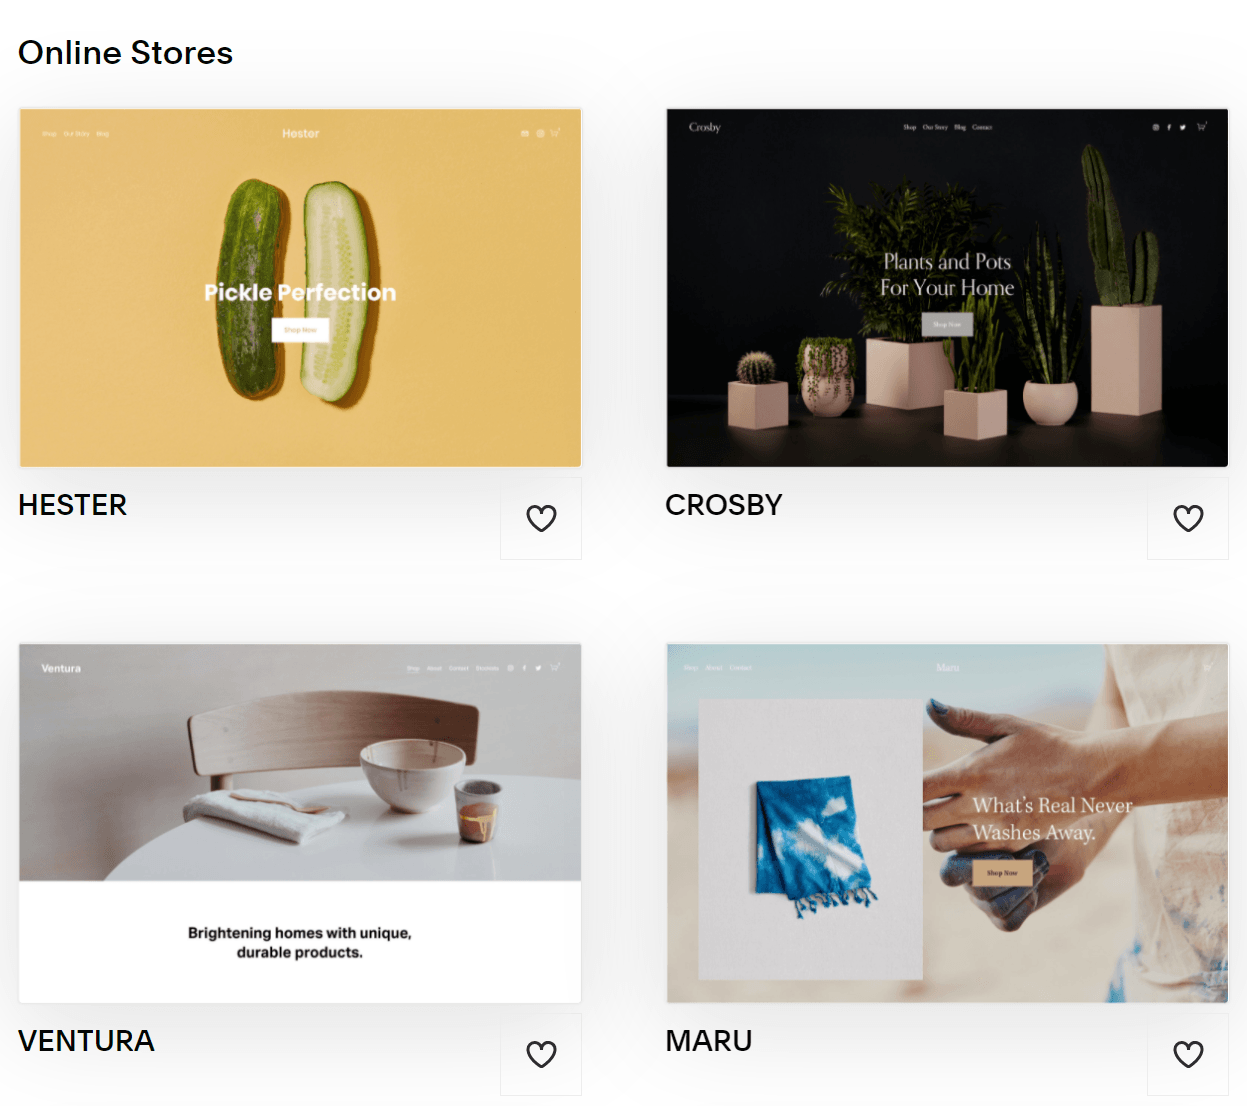 Screenshot of theme options in Squarespace ecommerce platform.